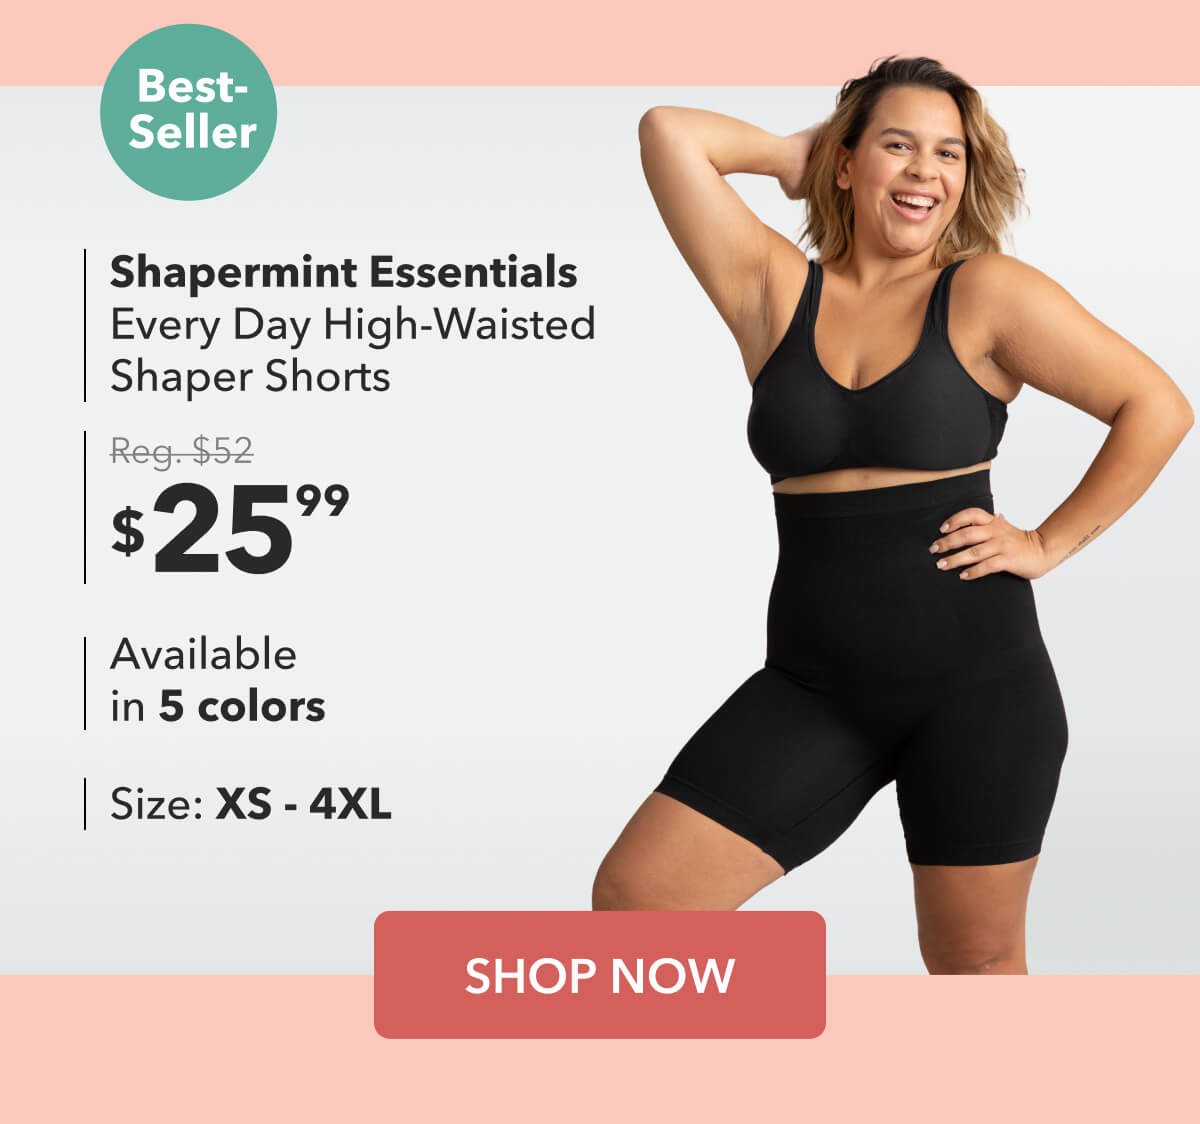 Shapermint - The easiest way to shop shapewear online